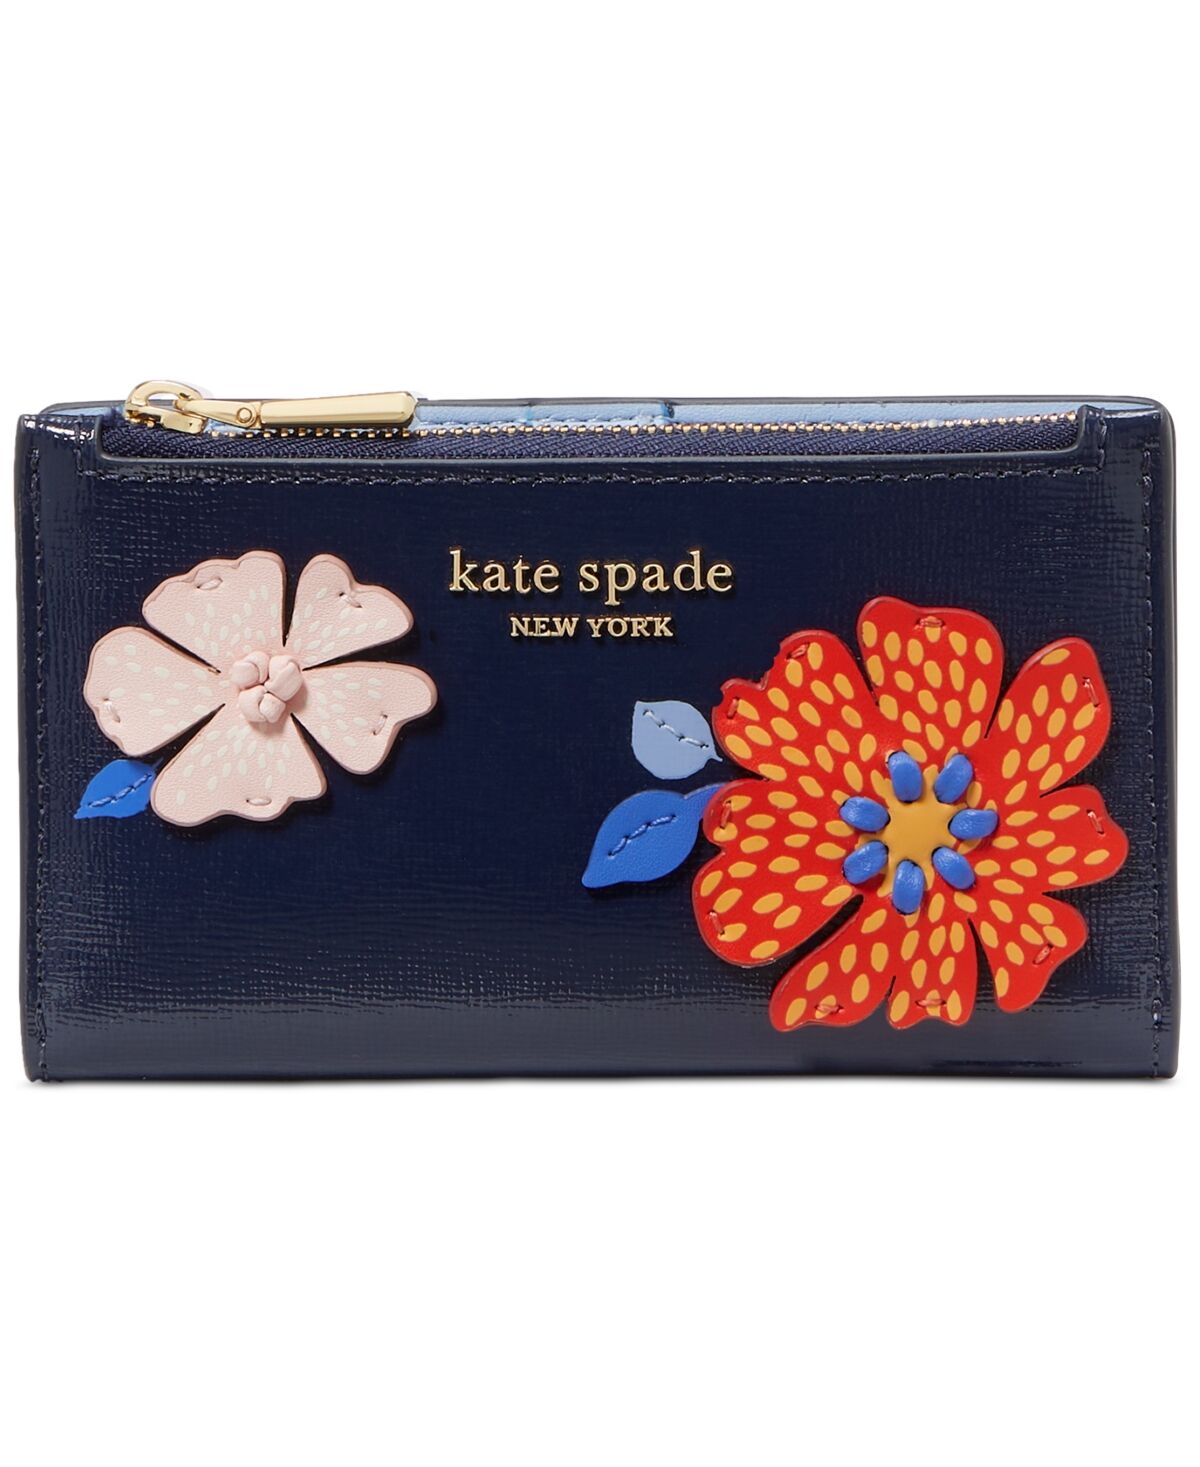 Kate Spade New York Dottie Bloom Flower Applique Saffiano Leather Small Slim Bifold Wallet - Parisian Navy Multi